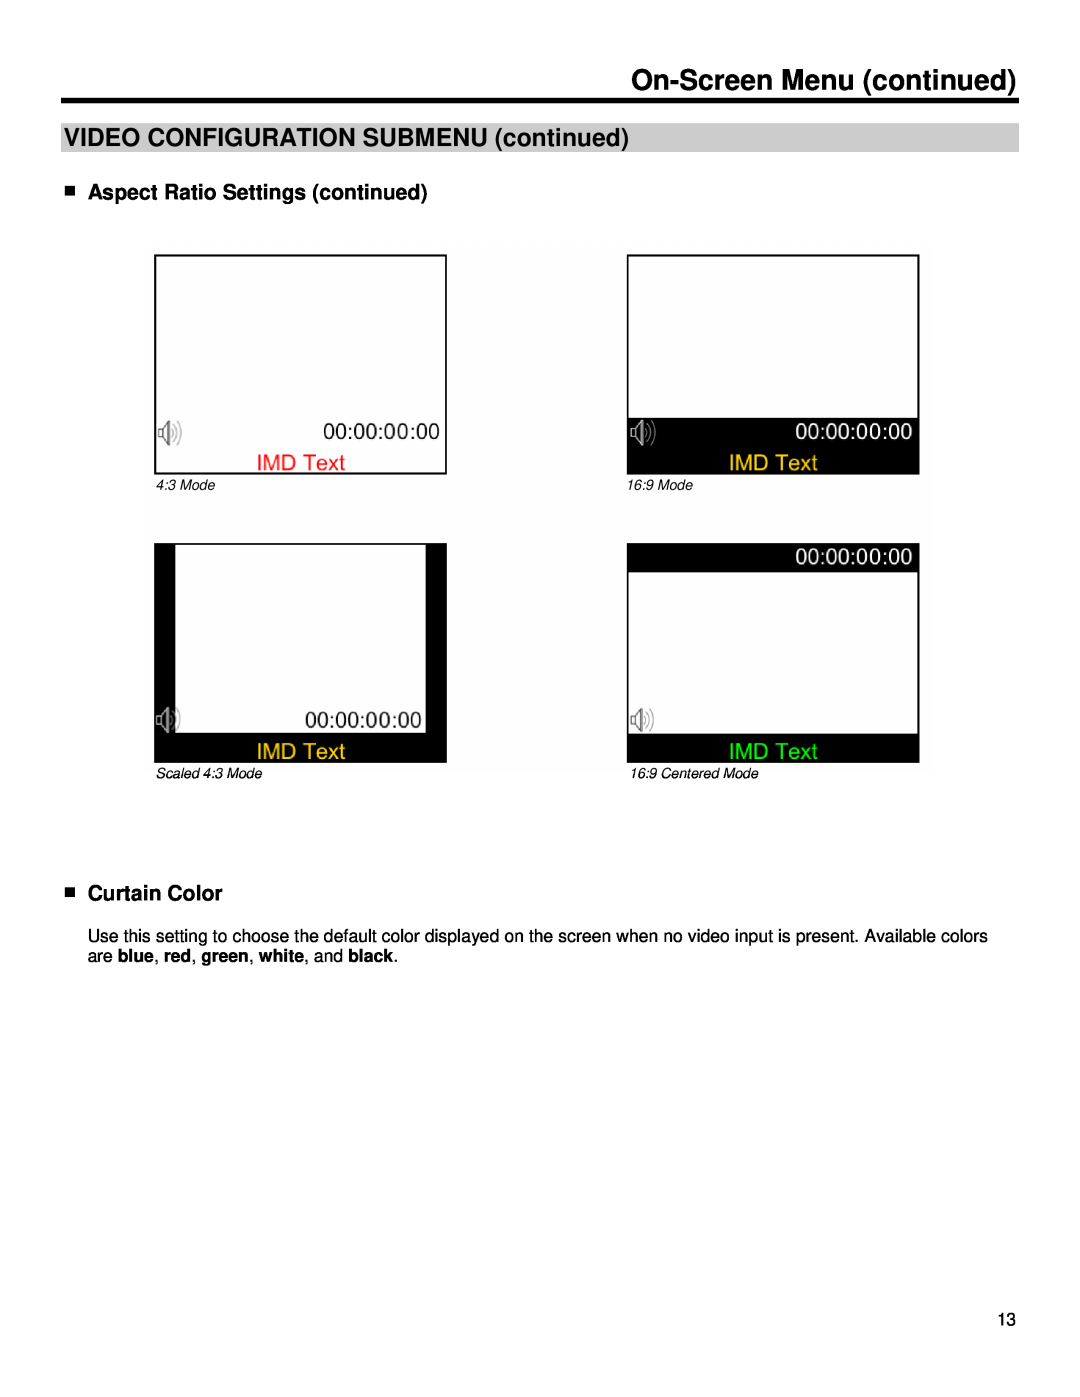 Marshall electronic V-R653SB-IMD manual Aspect Ratio Settings continued, Curtain Color, On-Screen Menu continued, Mode 